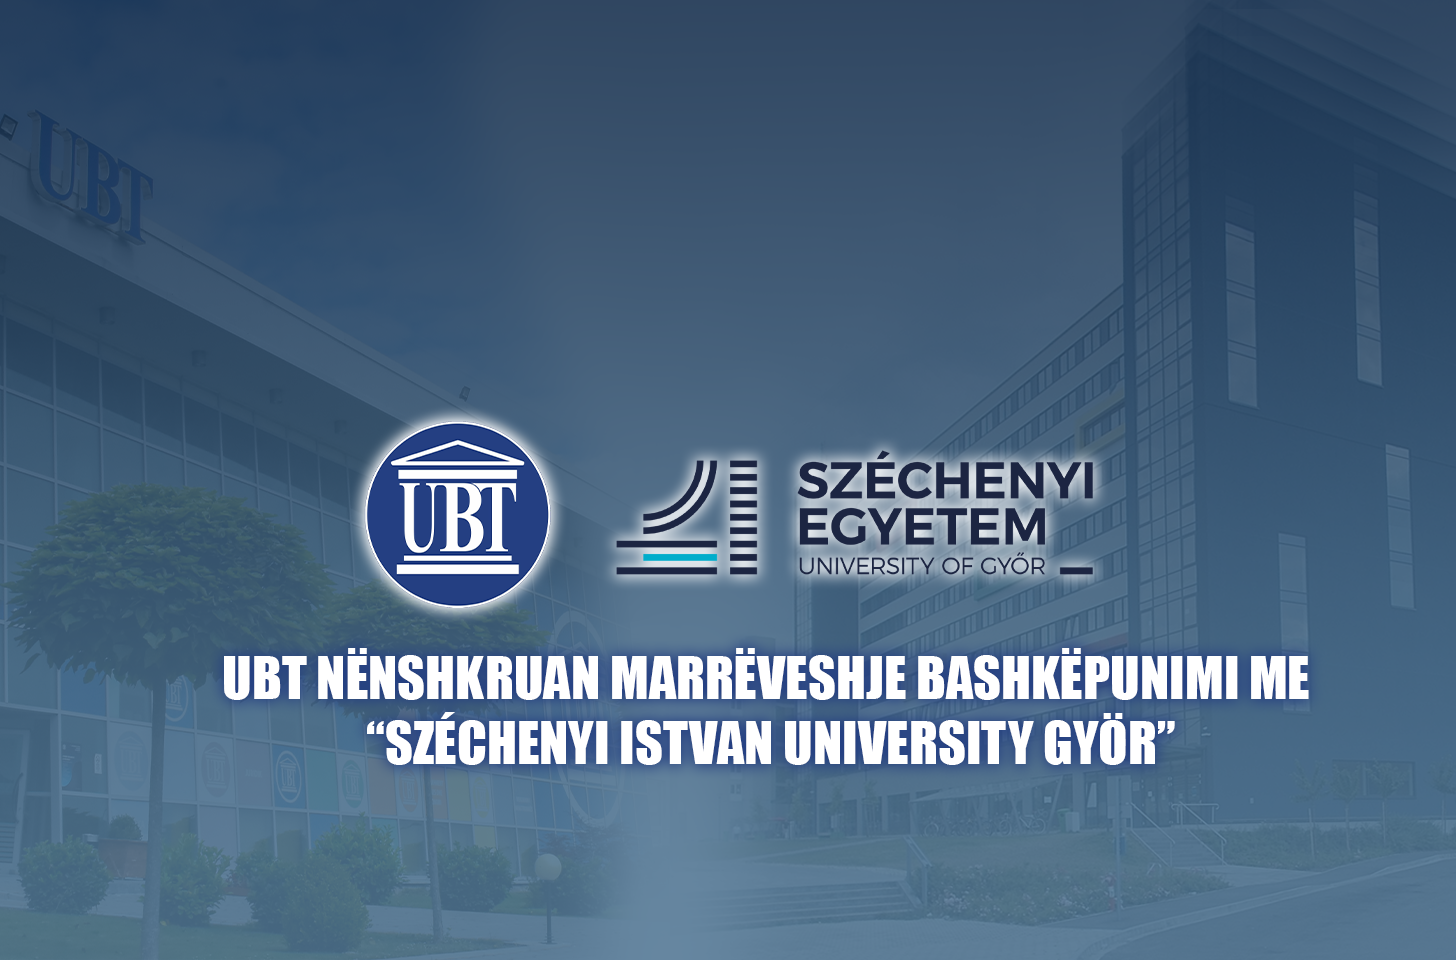 UBT signs a memorandum of cooperation with “Széchenyi István University Györ” in Hungary